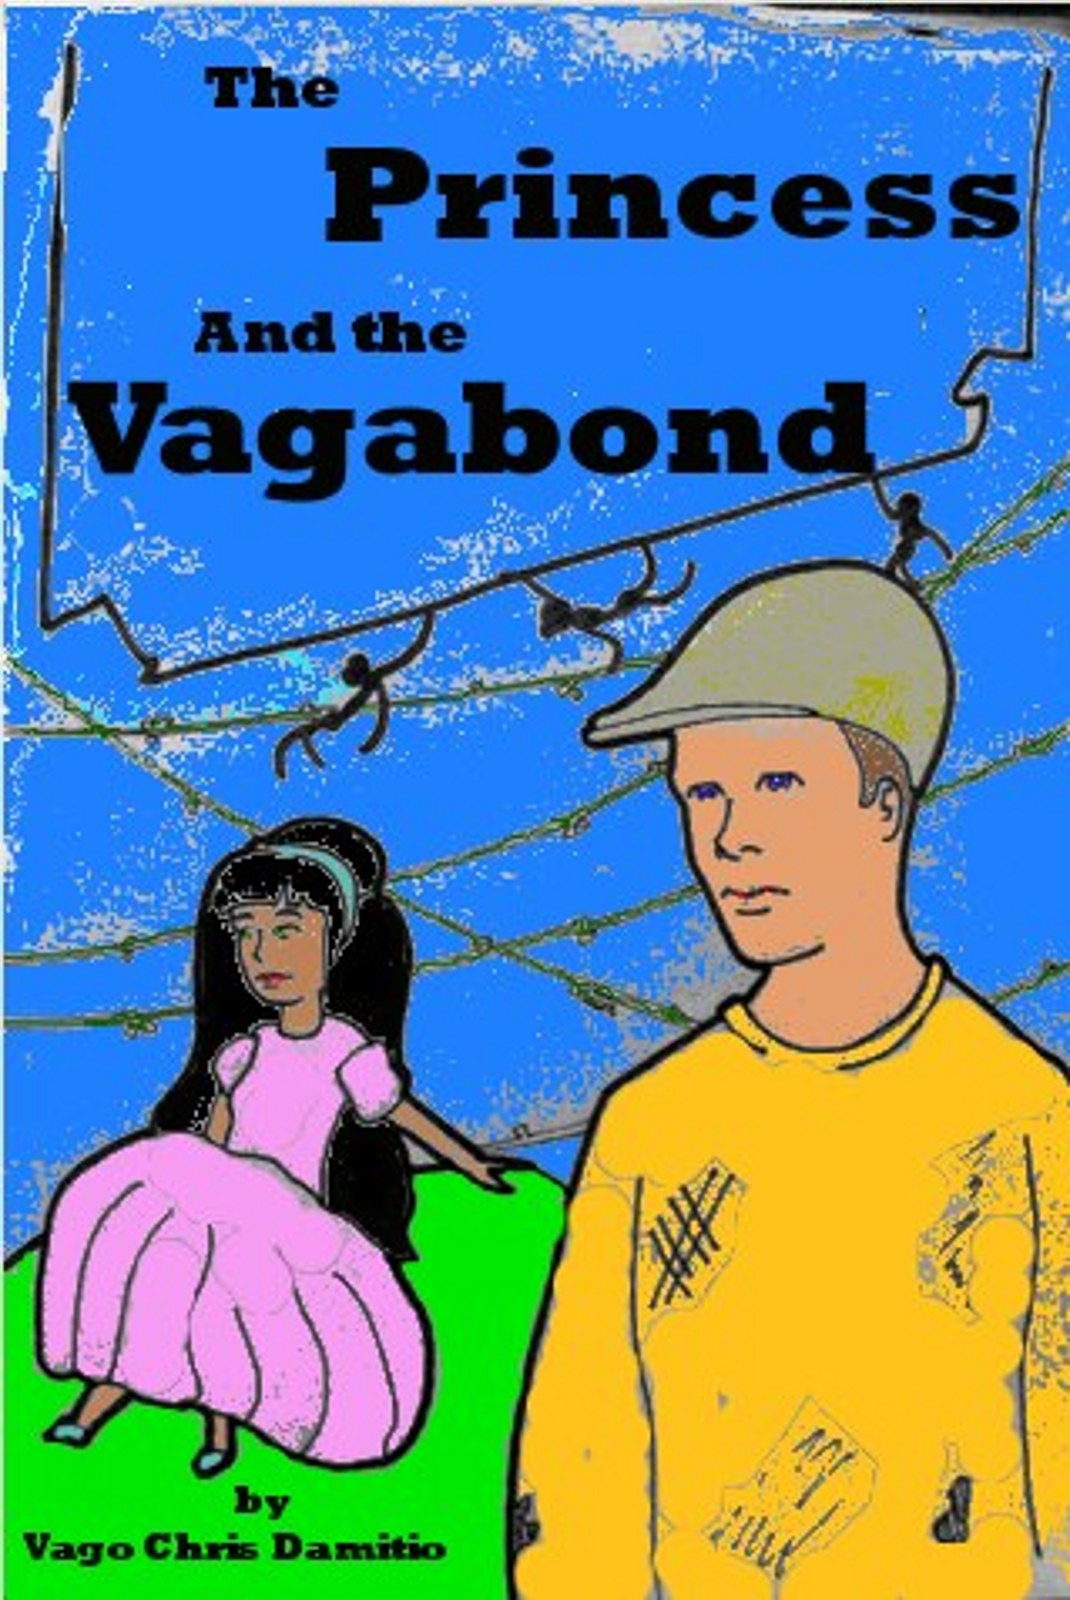 The Princess and the Vagobond